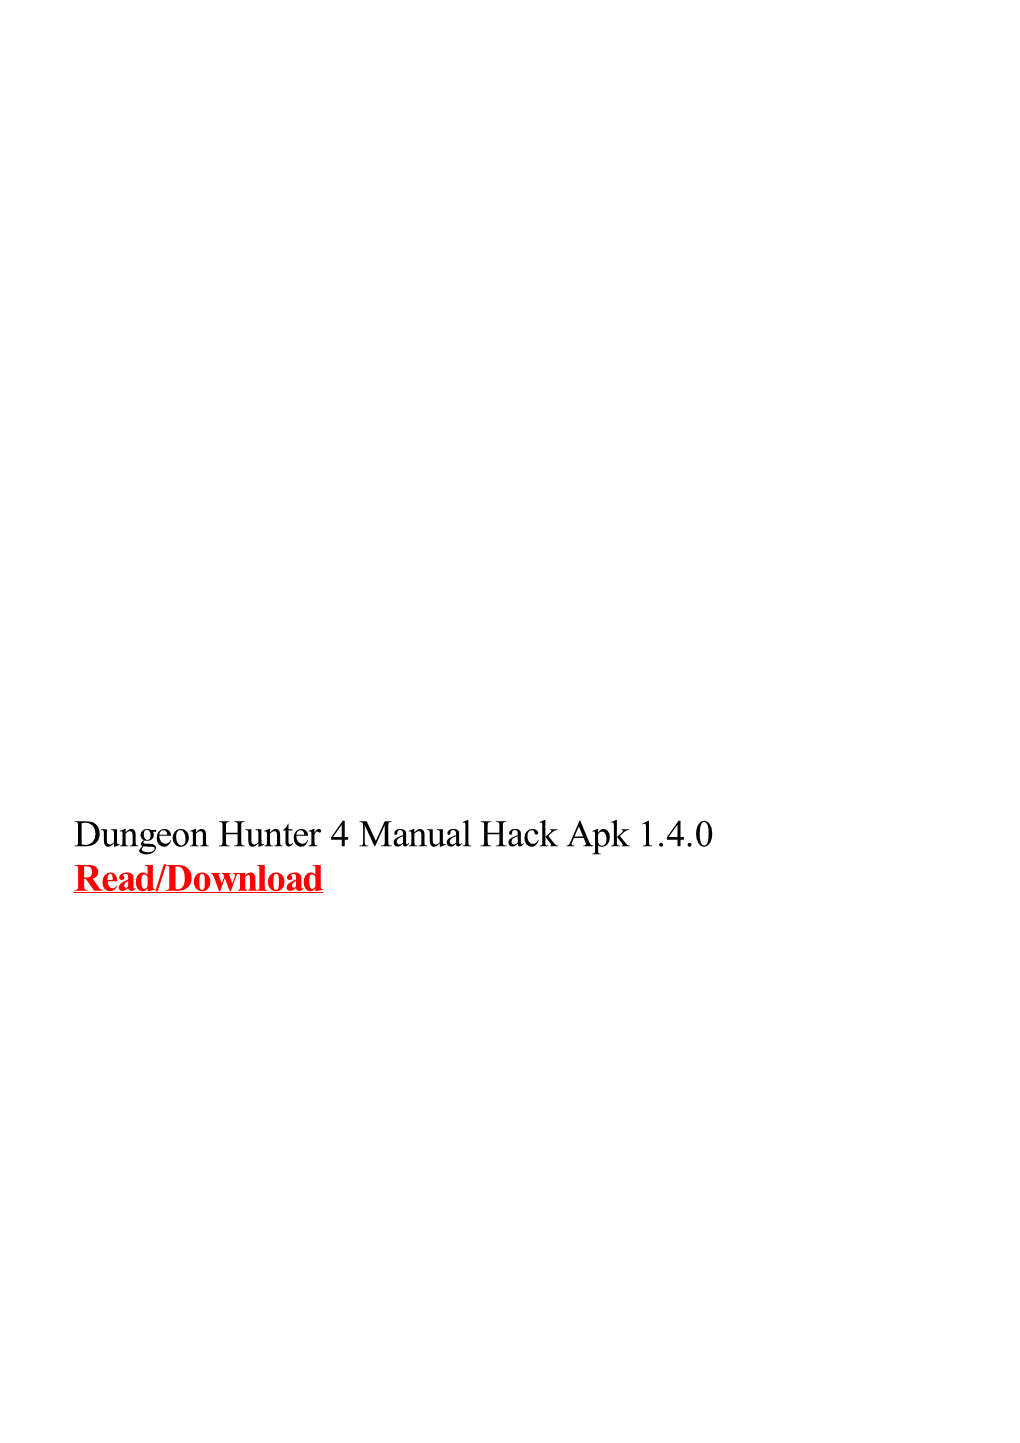 Dungeon Hunter 4 Manual Hack Apk 1.4.0